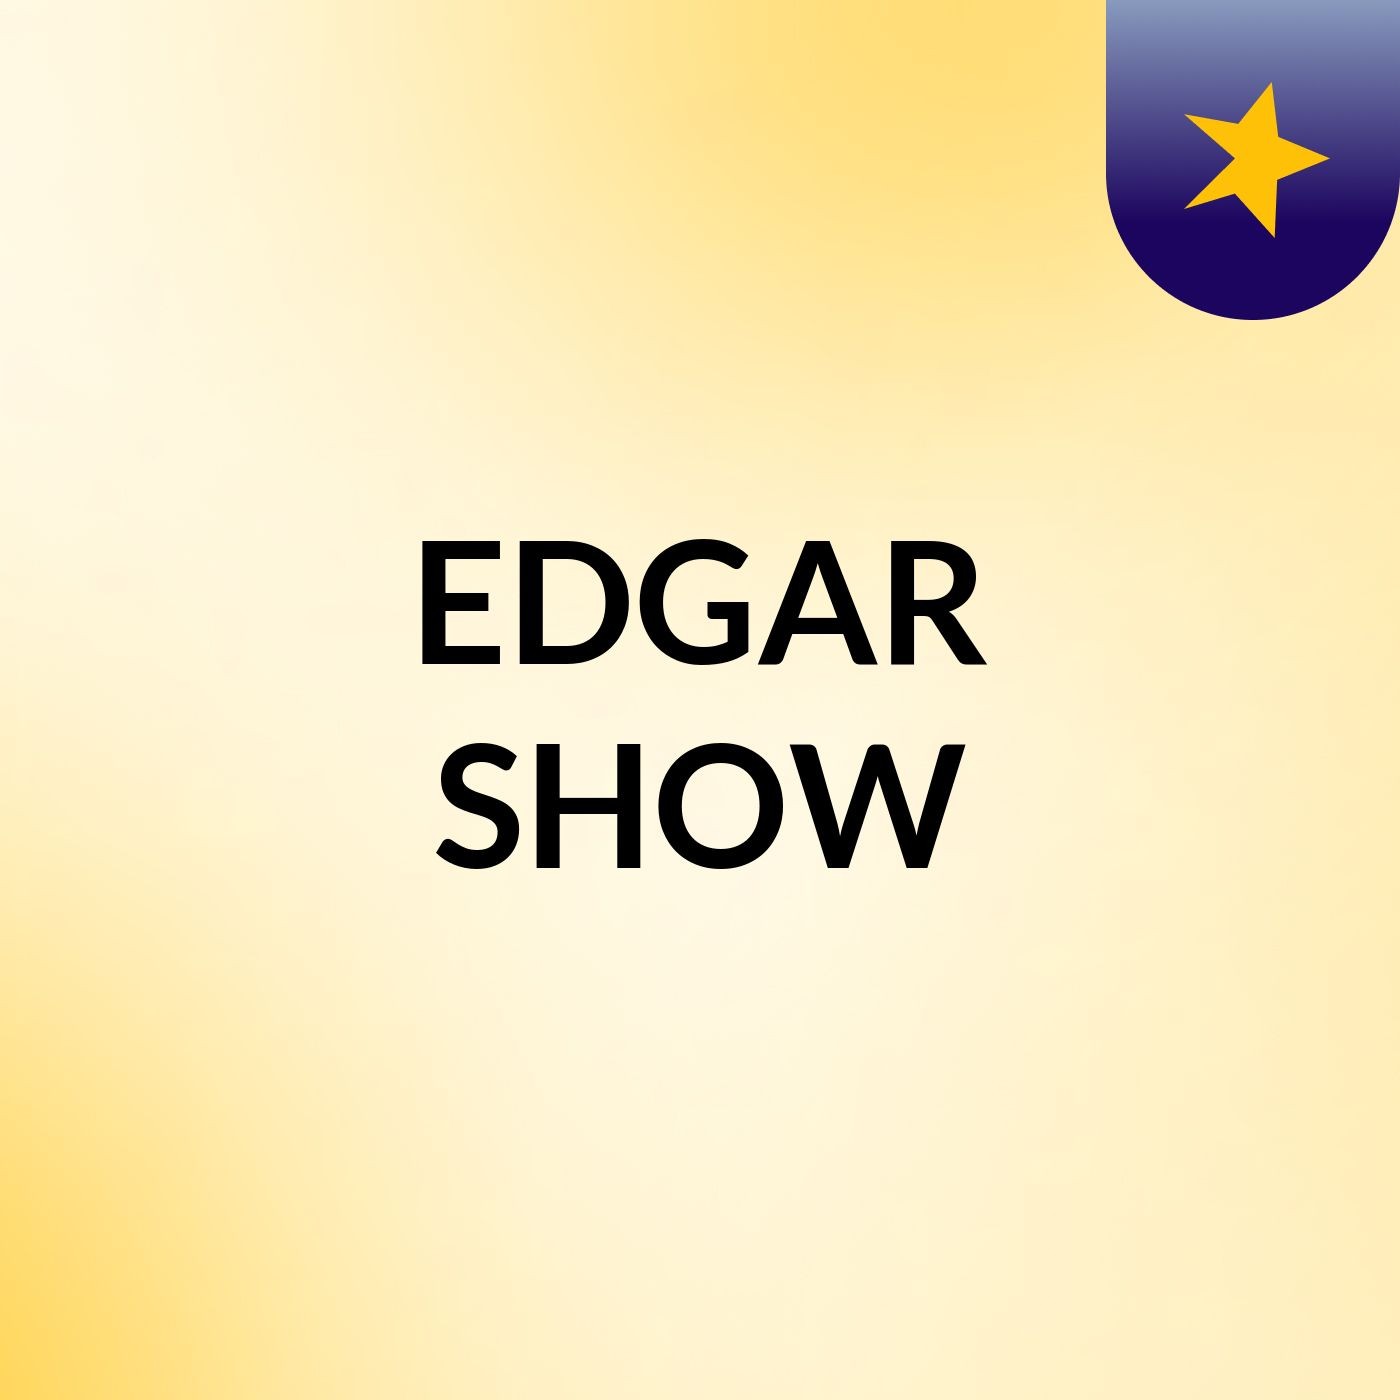 EDGAR SHOW